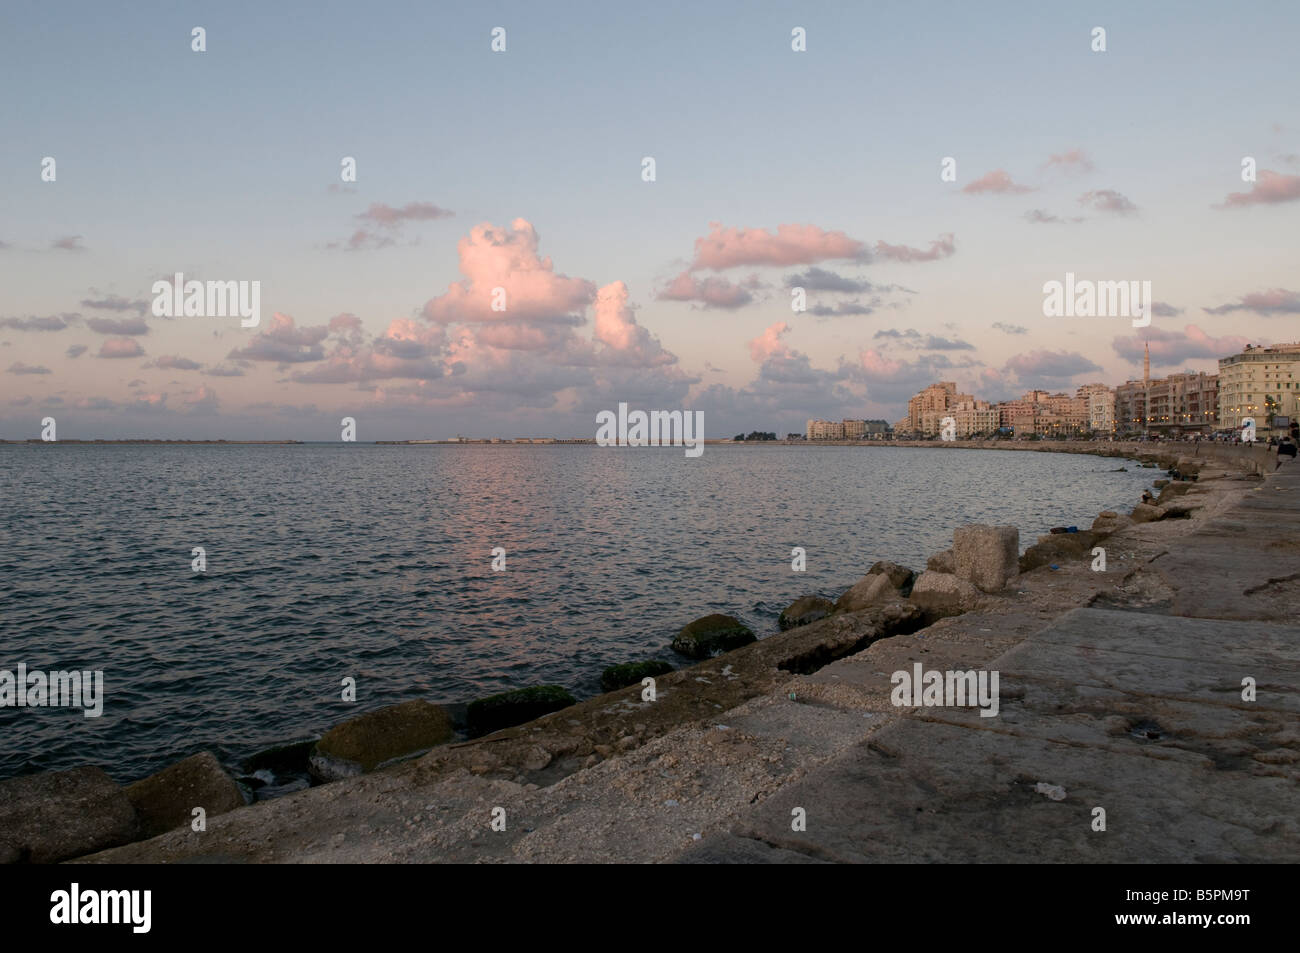 View of the waterfront promenade corniche in the city of Alexandria Egypt Stock Photo